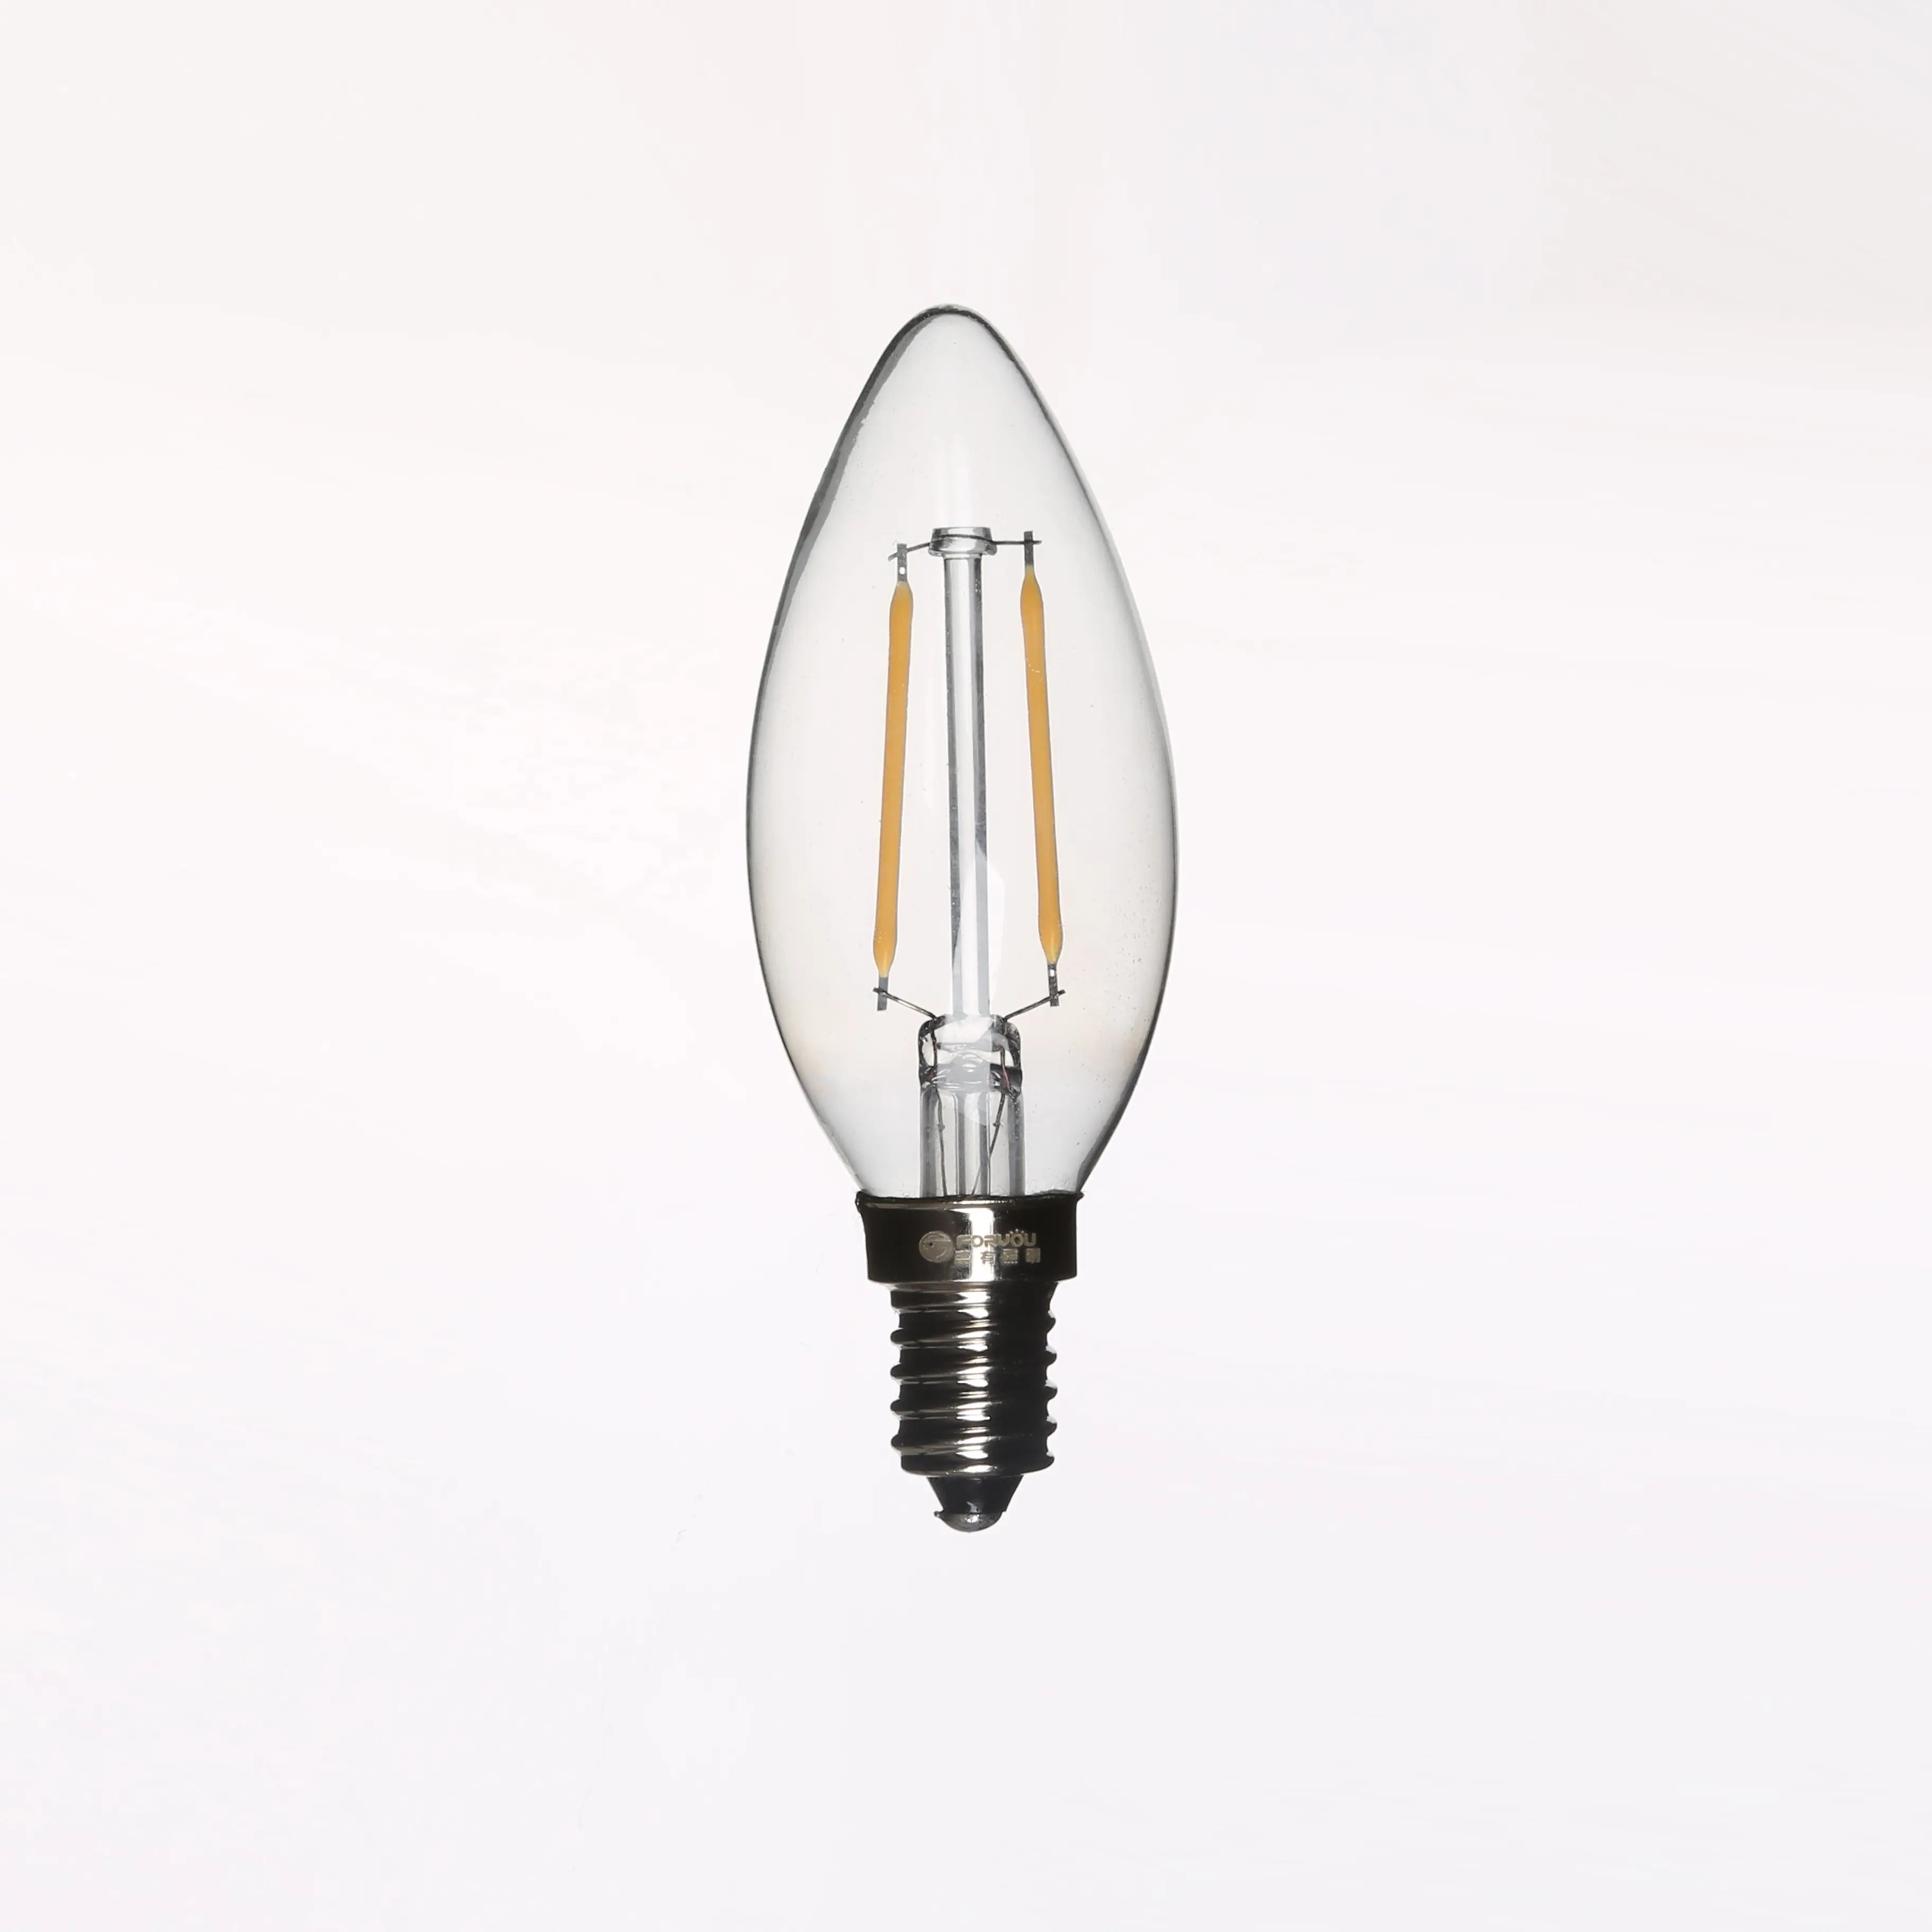 Hottest Antique Vintage Bulbs C35 2w 4w E14 Cylinder Filament Candelabra Candle Shaped Led Light Bulb